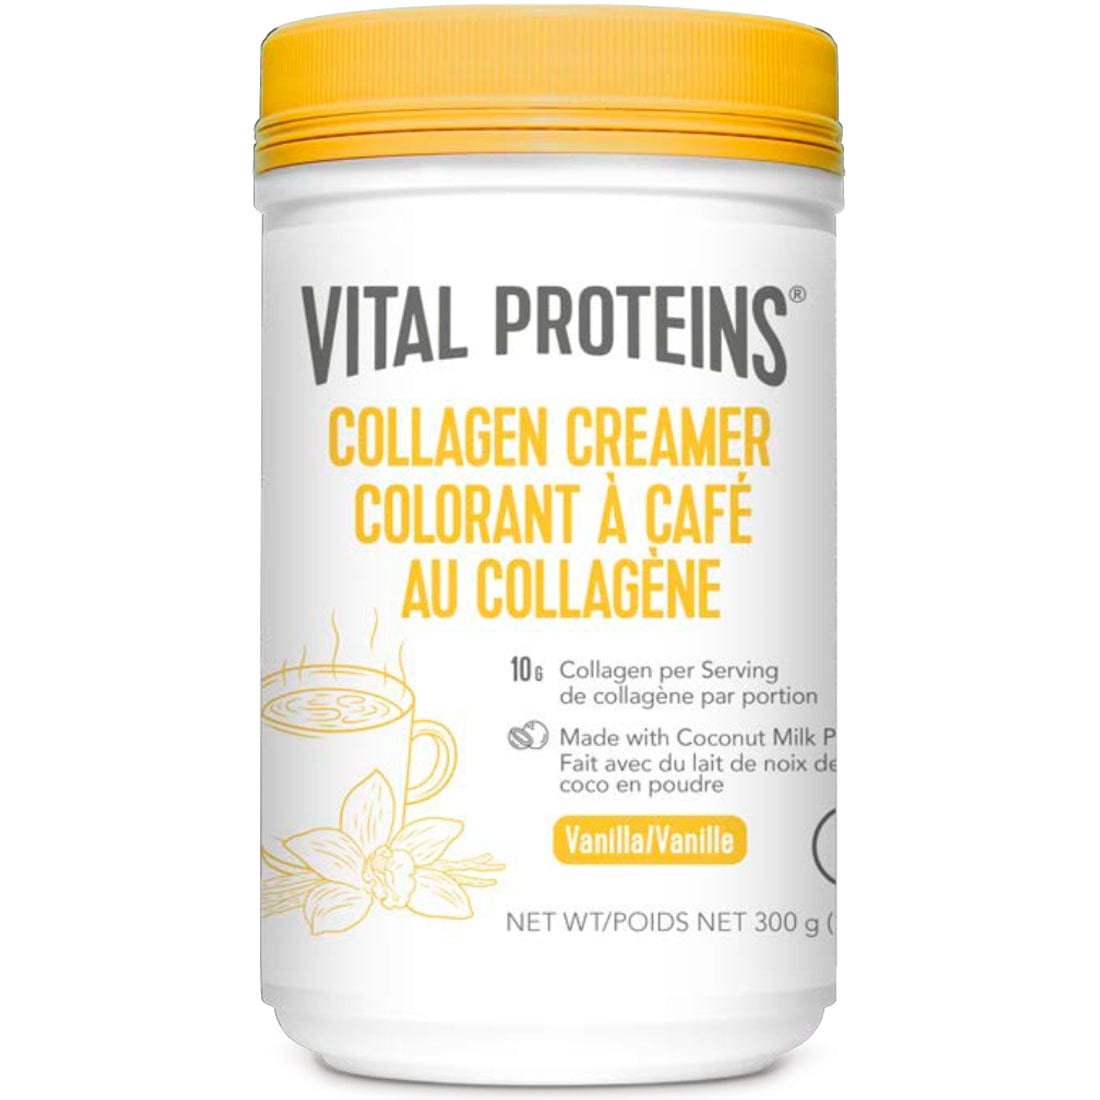 Vital Proteins Collagen Creamer 10g Collagen Peptides per Serving (Made with Organic Coconut Milk)